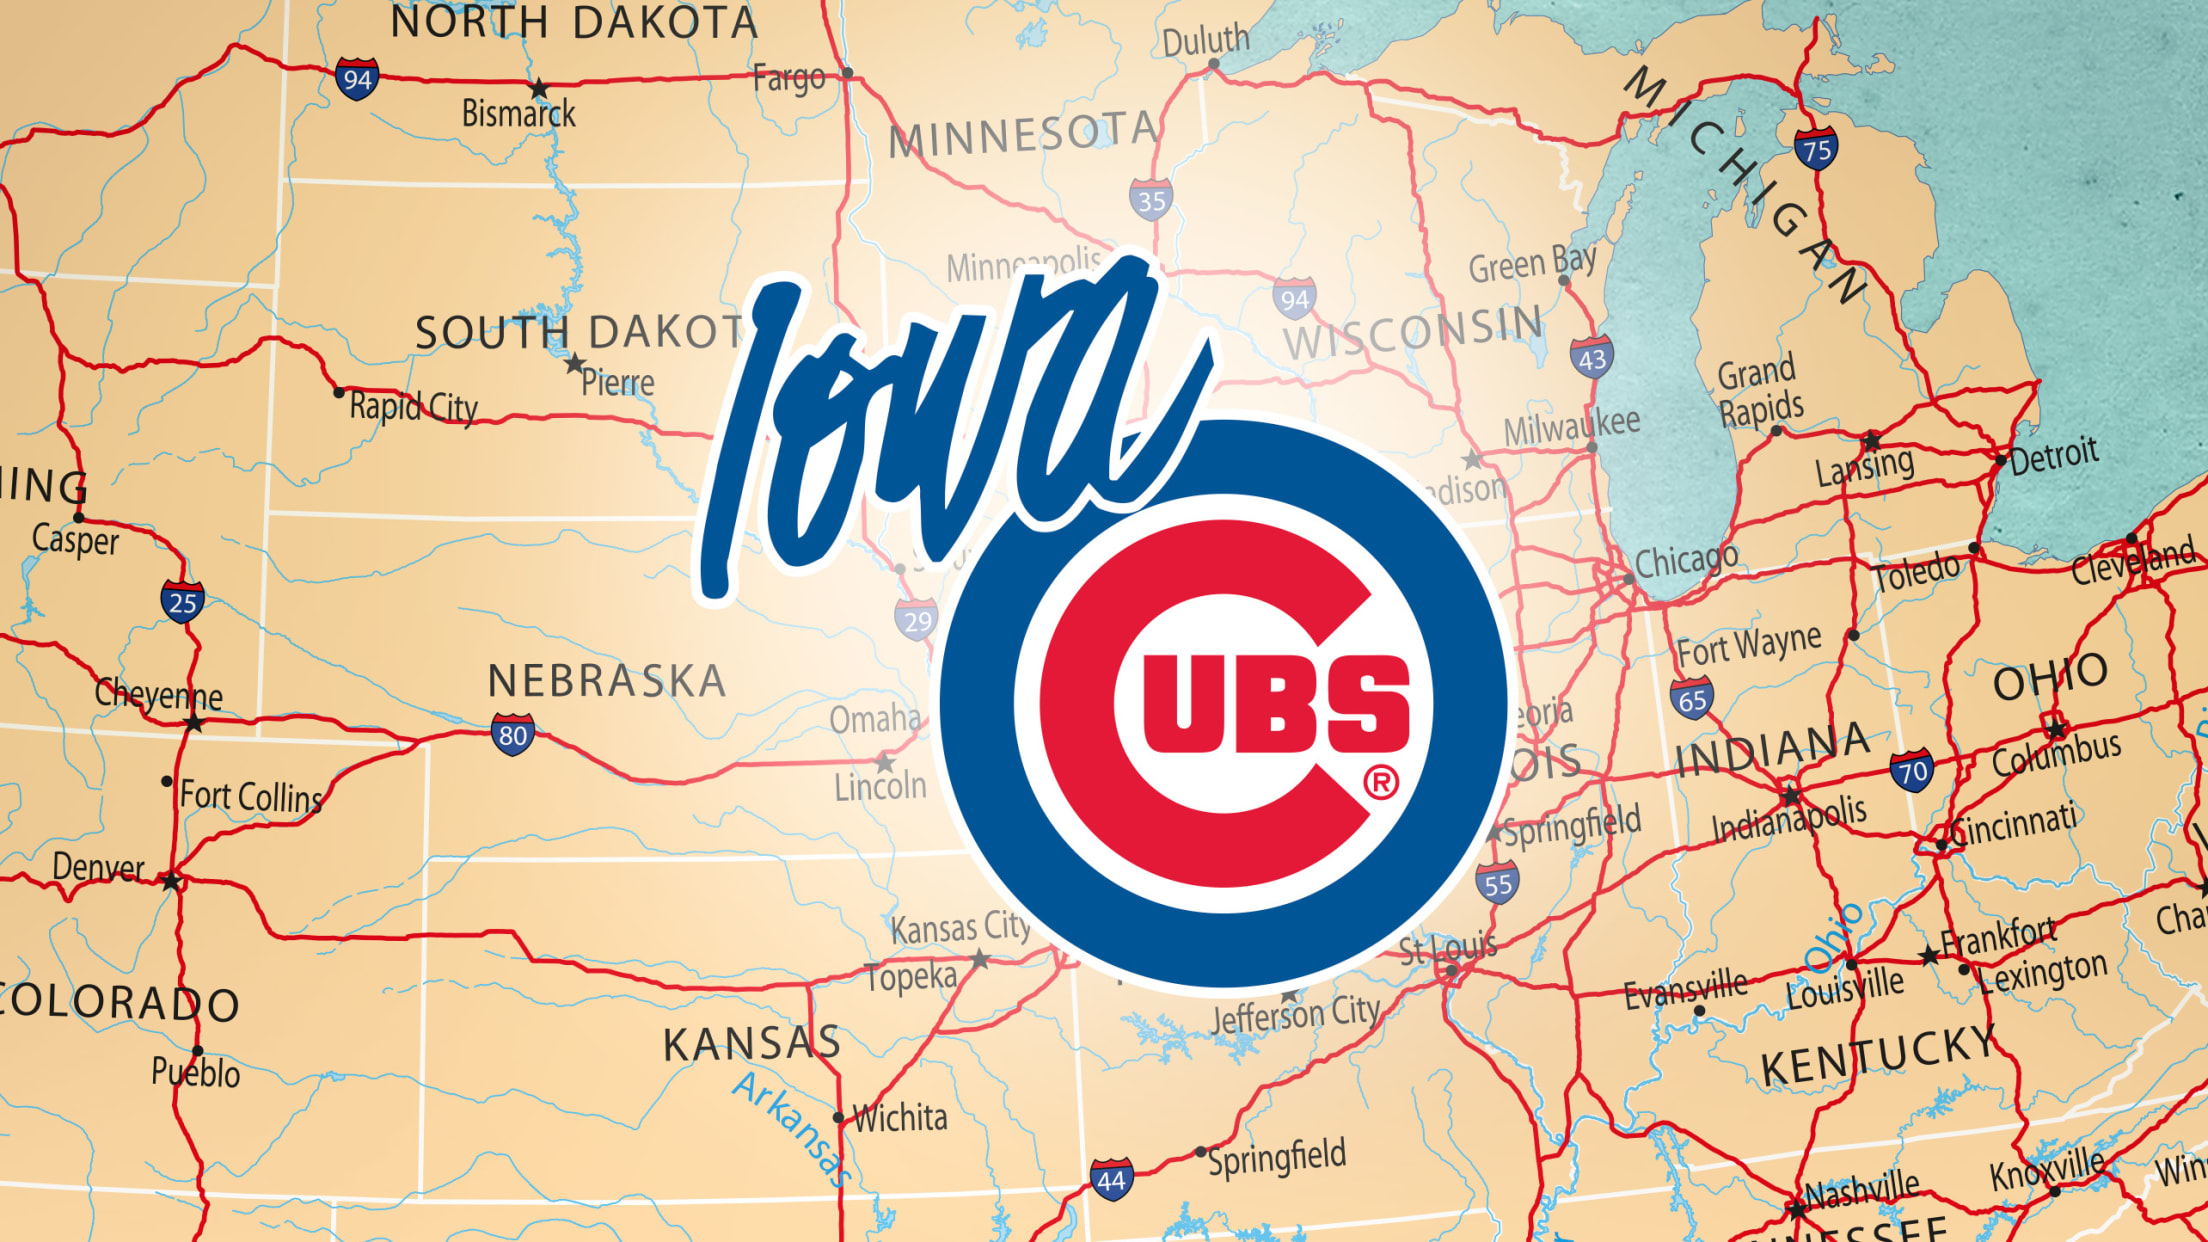 Explore Principal Park home of the Iowa Cubs